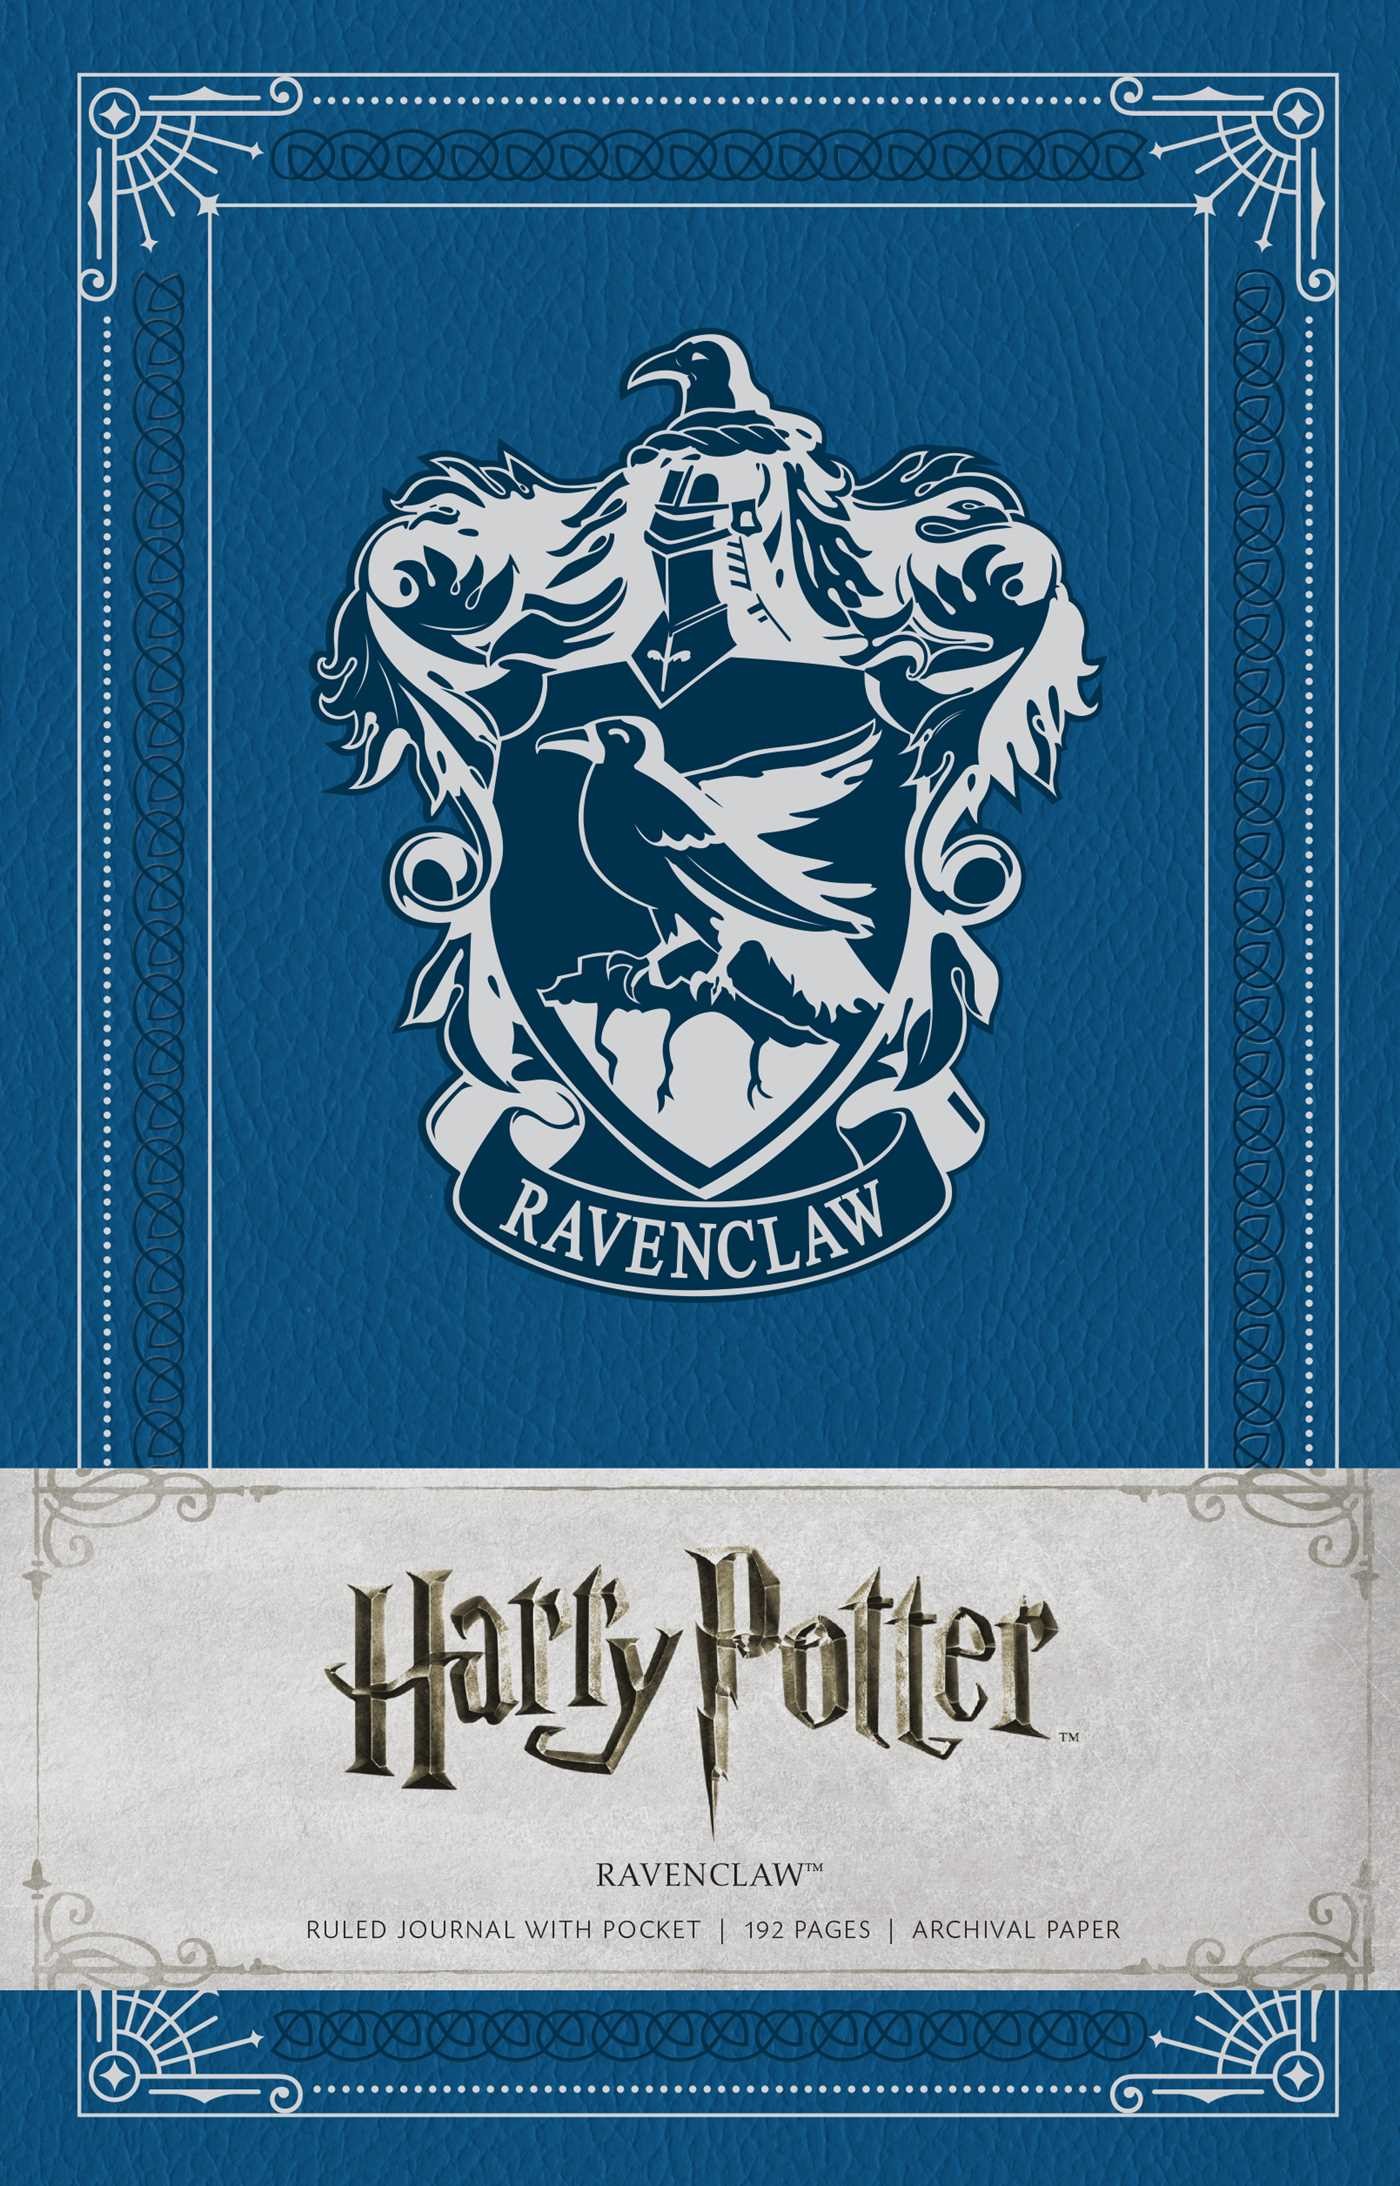 Harry potter ravenclaw hardcover ruled journal 9781608879496 hr …